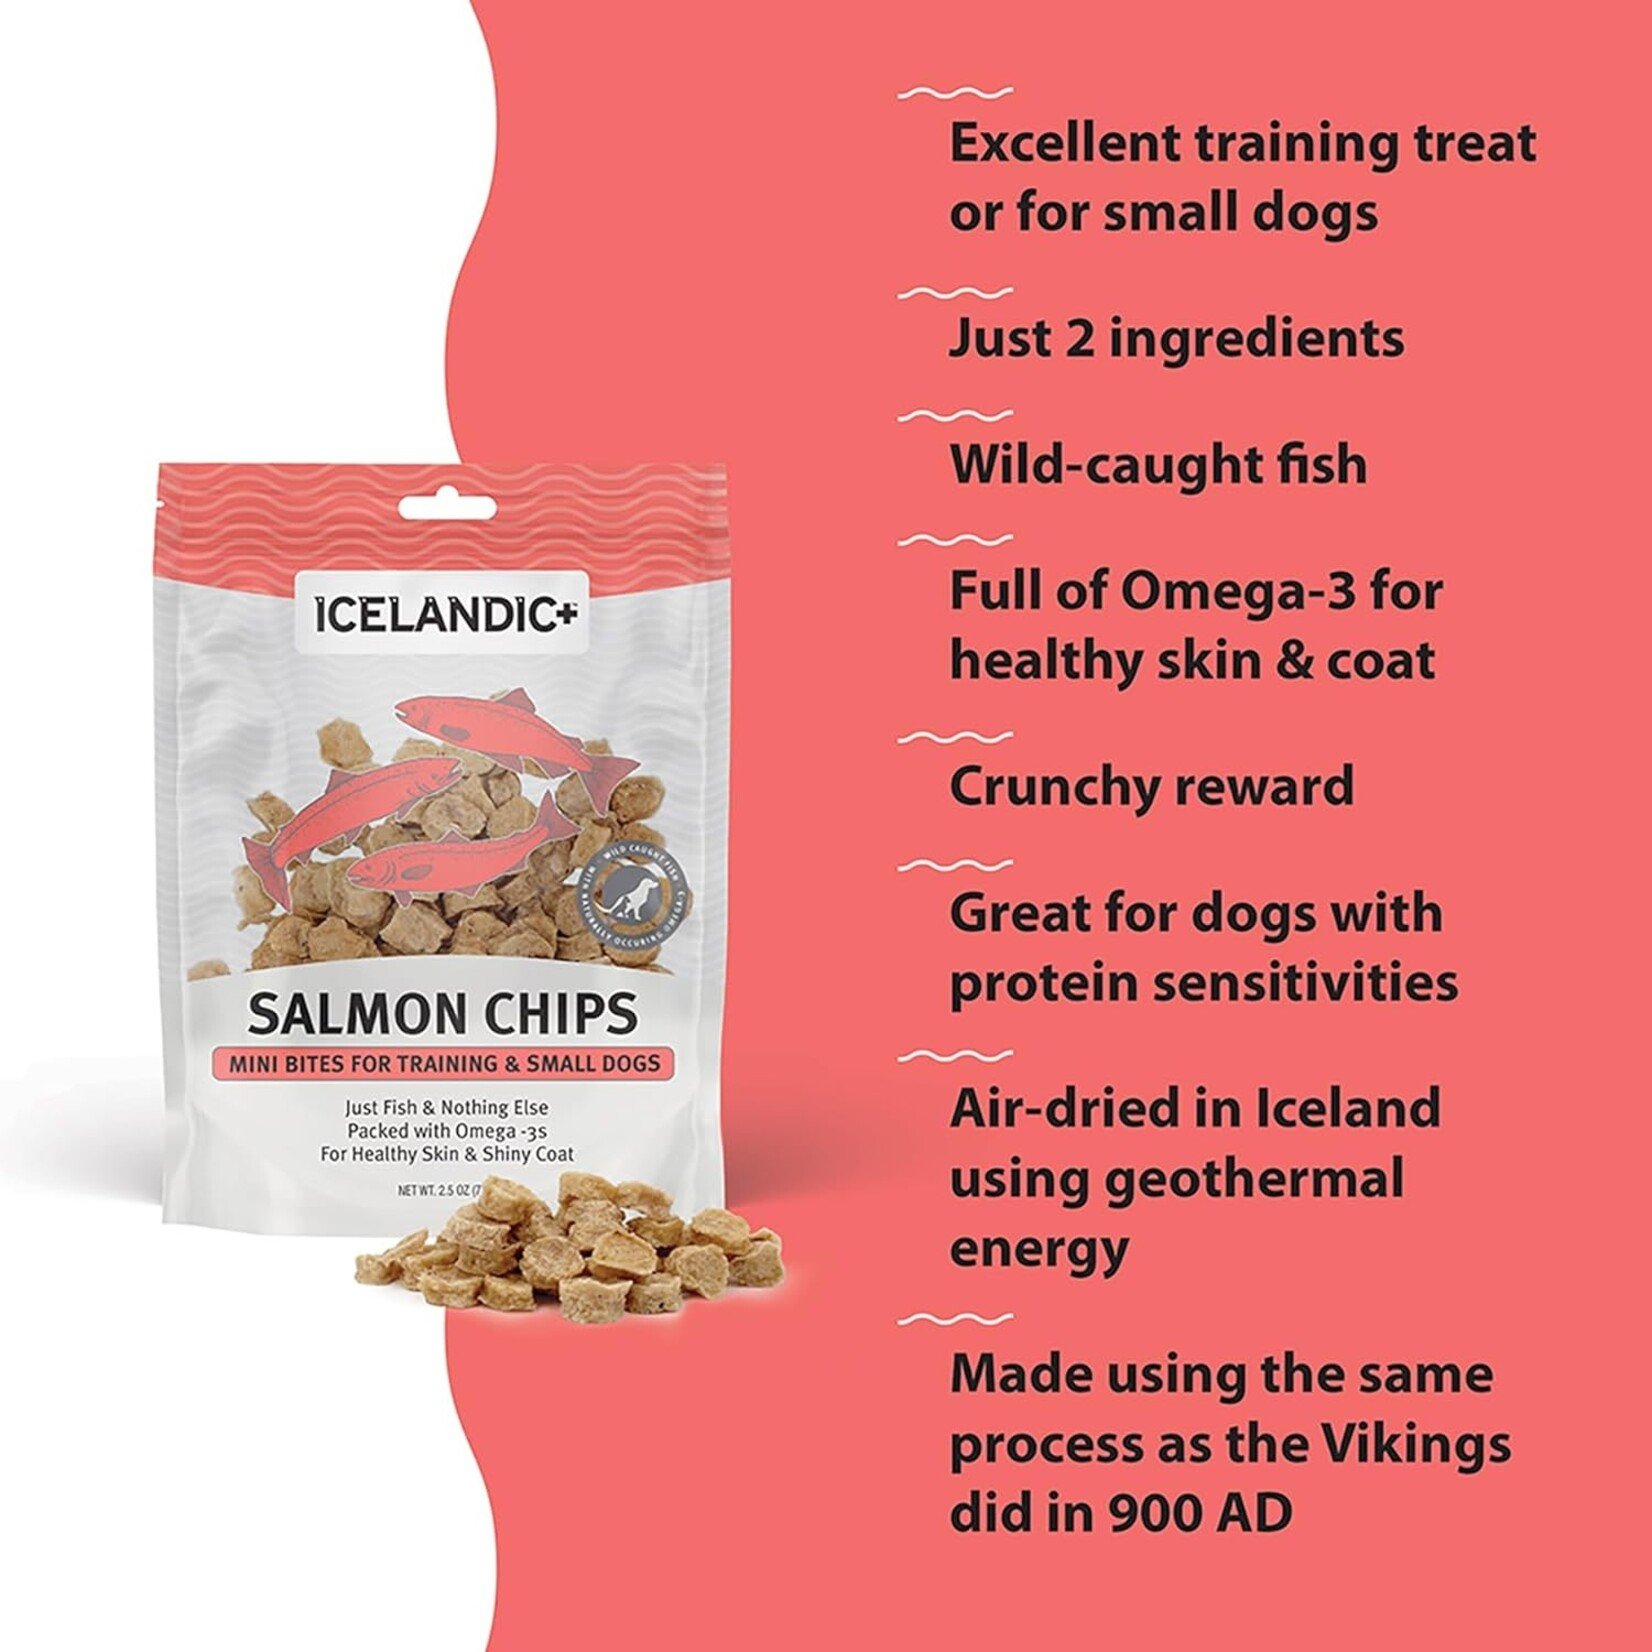 Icelandic+ Icelandic+ Salmon Mini Fish Chips Dog Treats 2.5oz